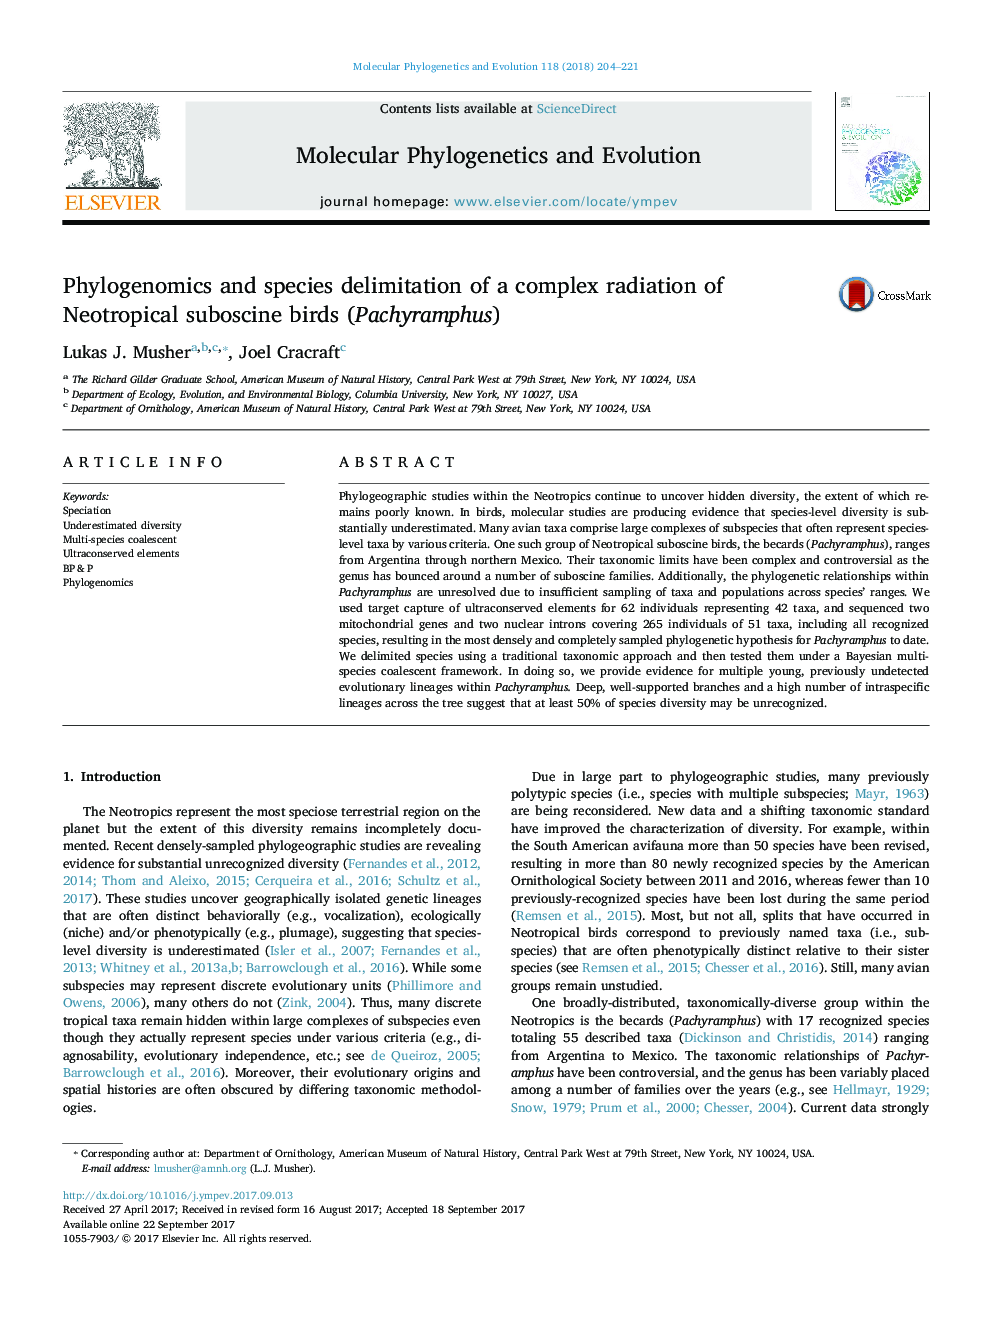 Phylogenomics and species delimitation of a complex radiation of Neotropical suboscine birds (Pachyramphus)